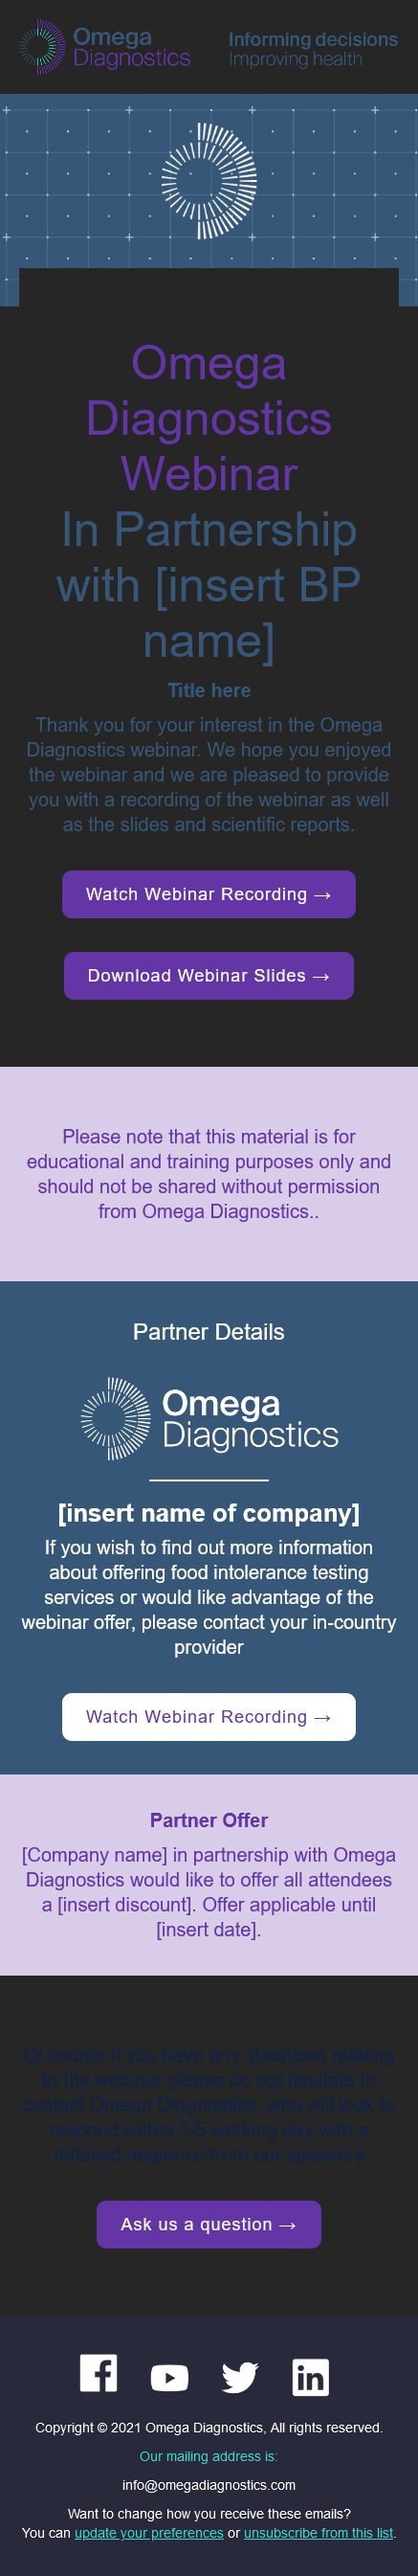 Email Templates Created For Omega Diagnostics Marketing Health Dark mode on mobile design